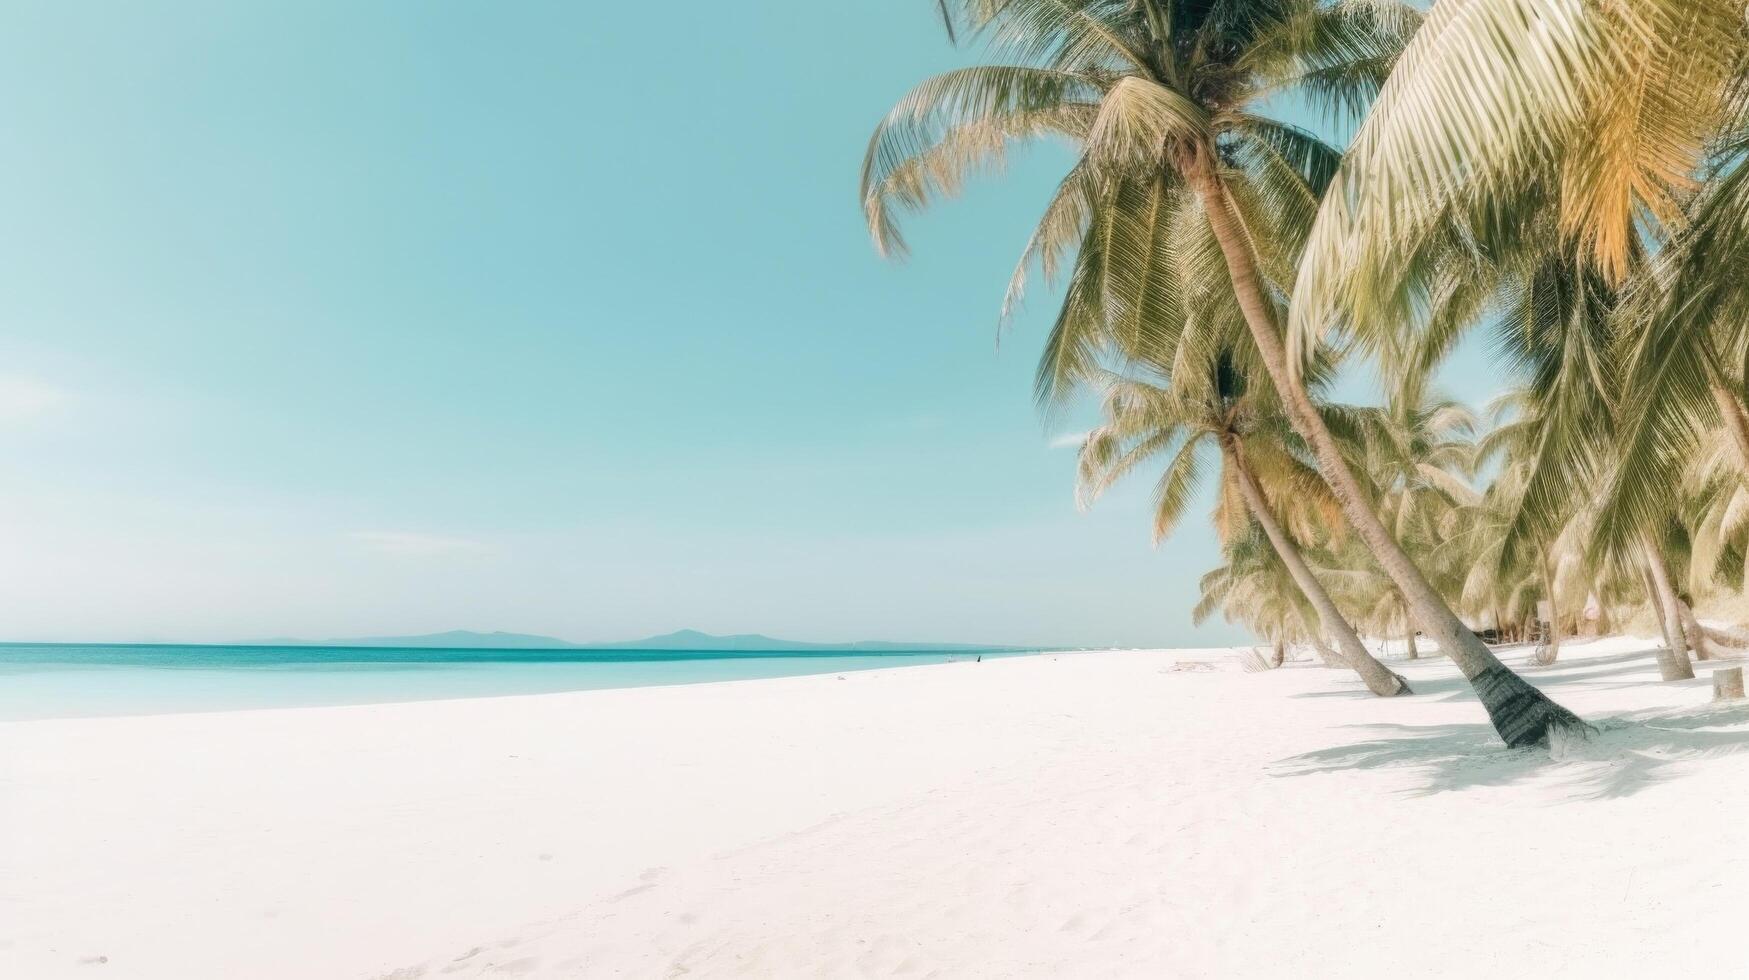 Palms on the beach. Illustration photo